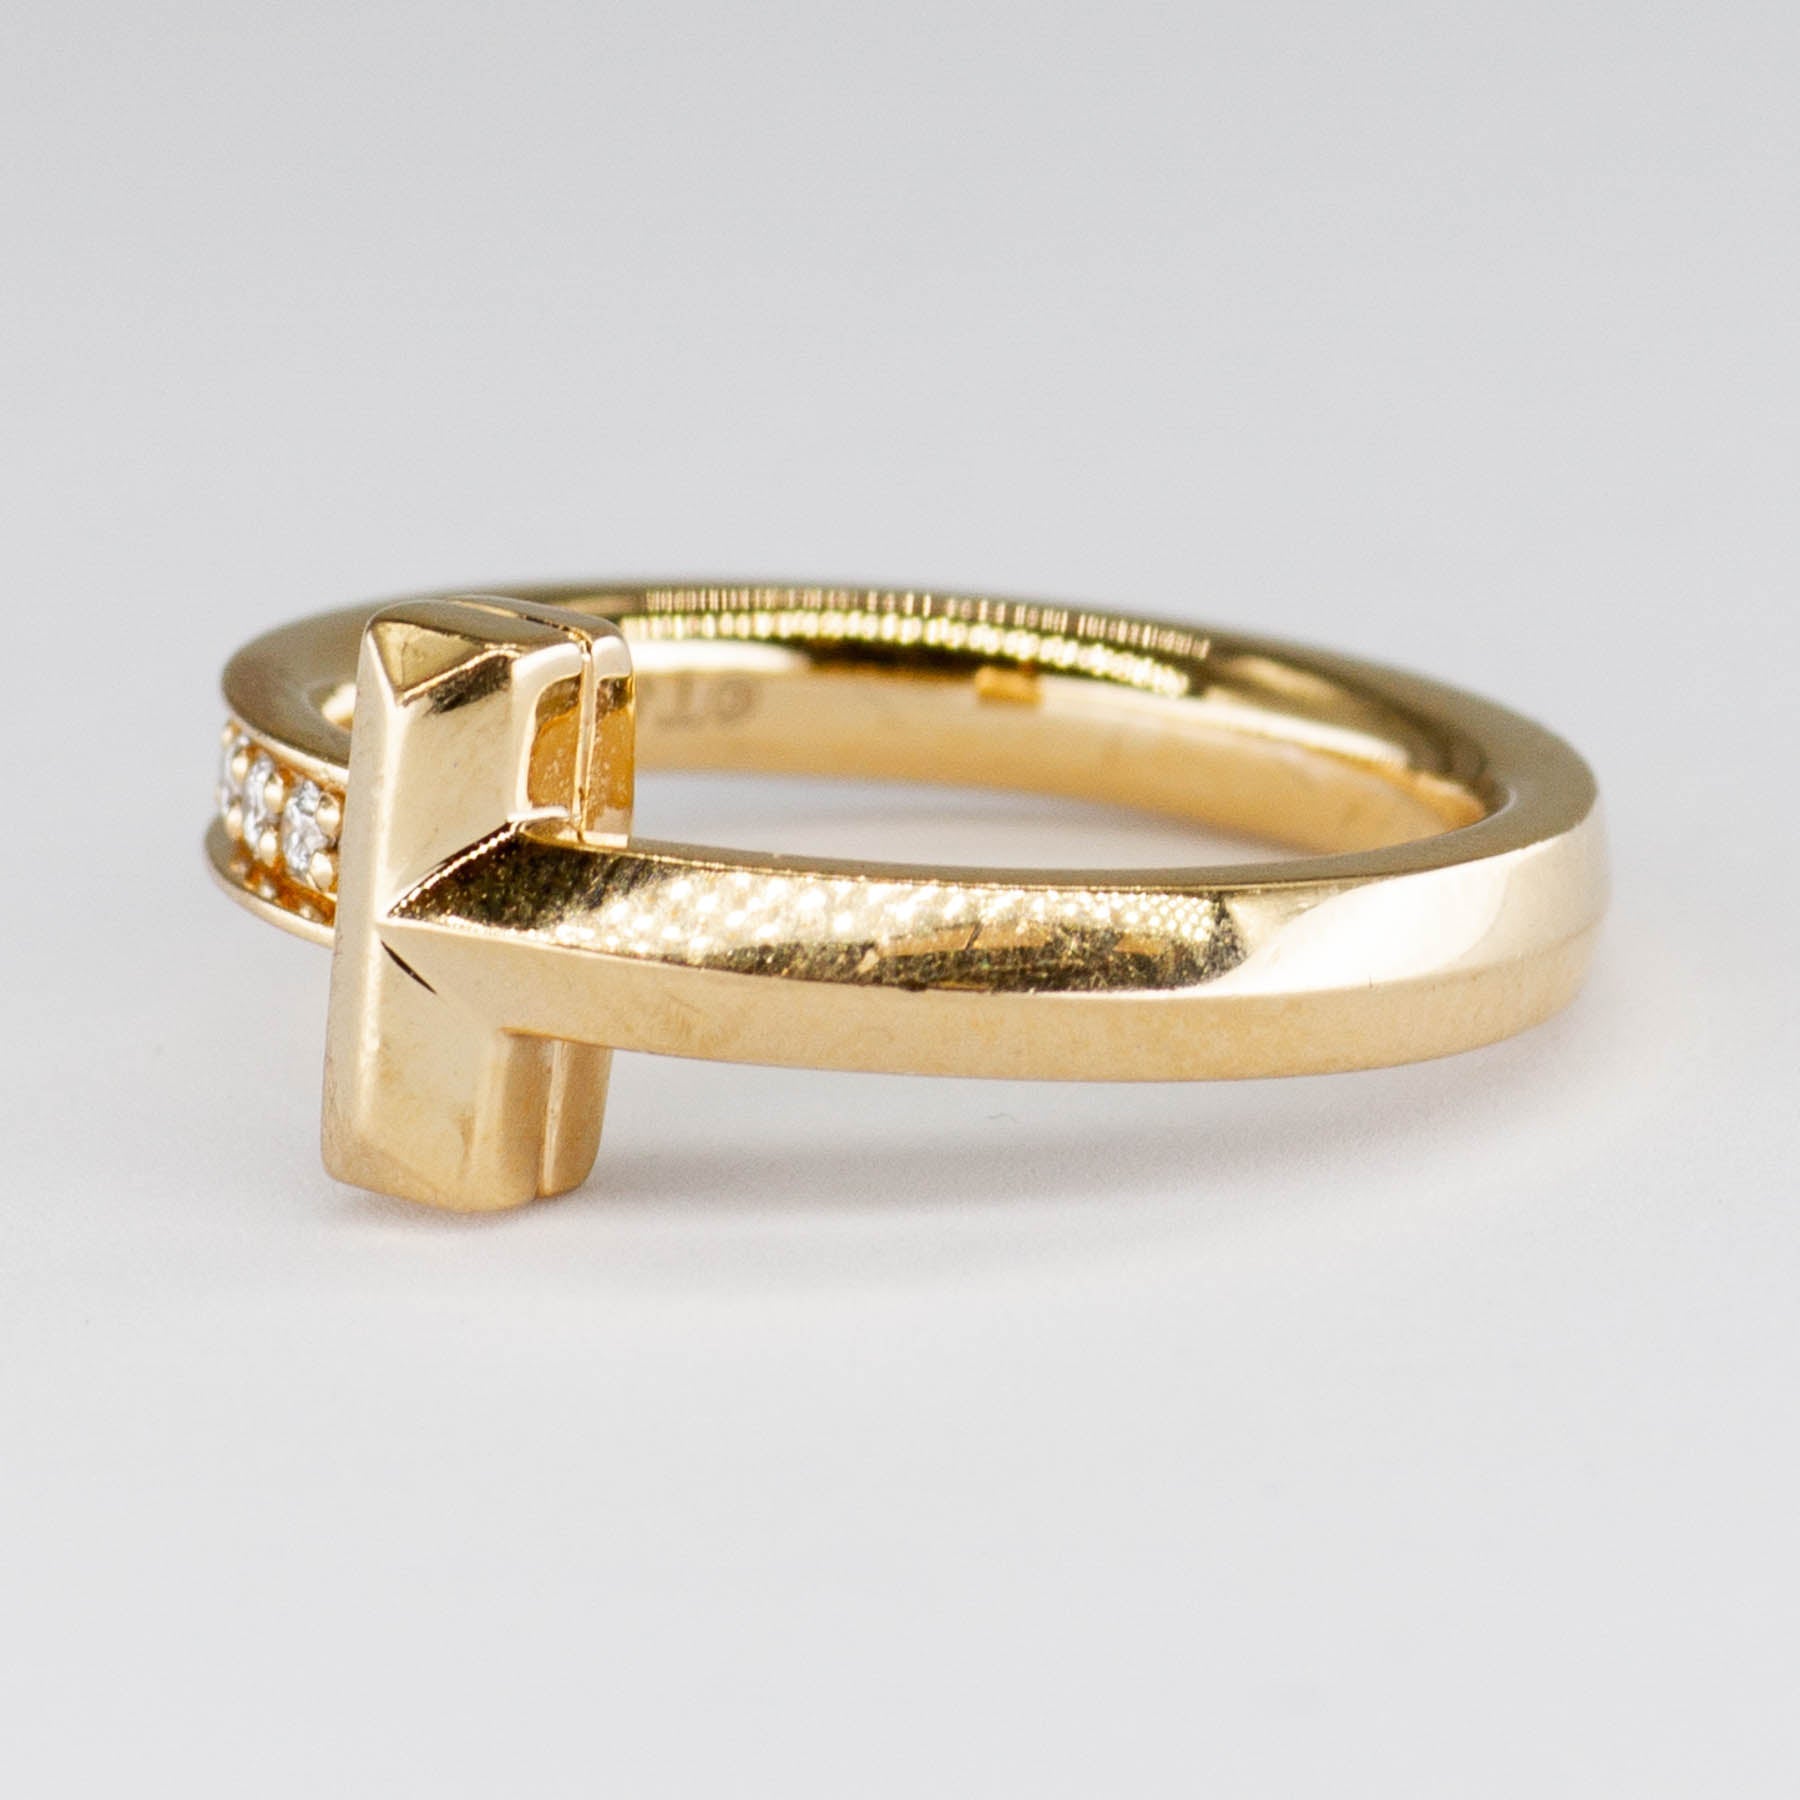 'Tiffany & Co.' T T1 18k Yellow Gold Diamond Ring | 0.08ctw | SZ 3.5 - 3.75 - 100 Ways